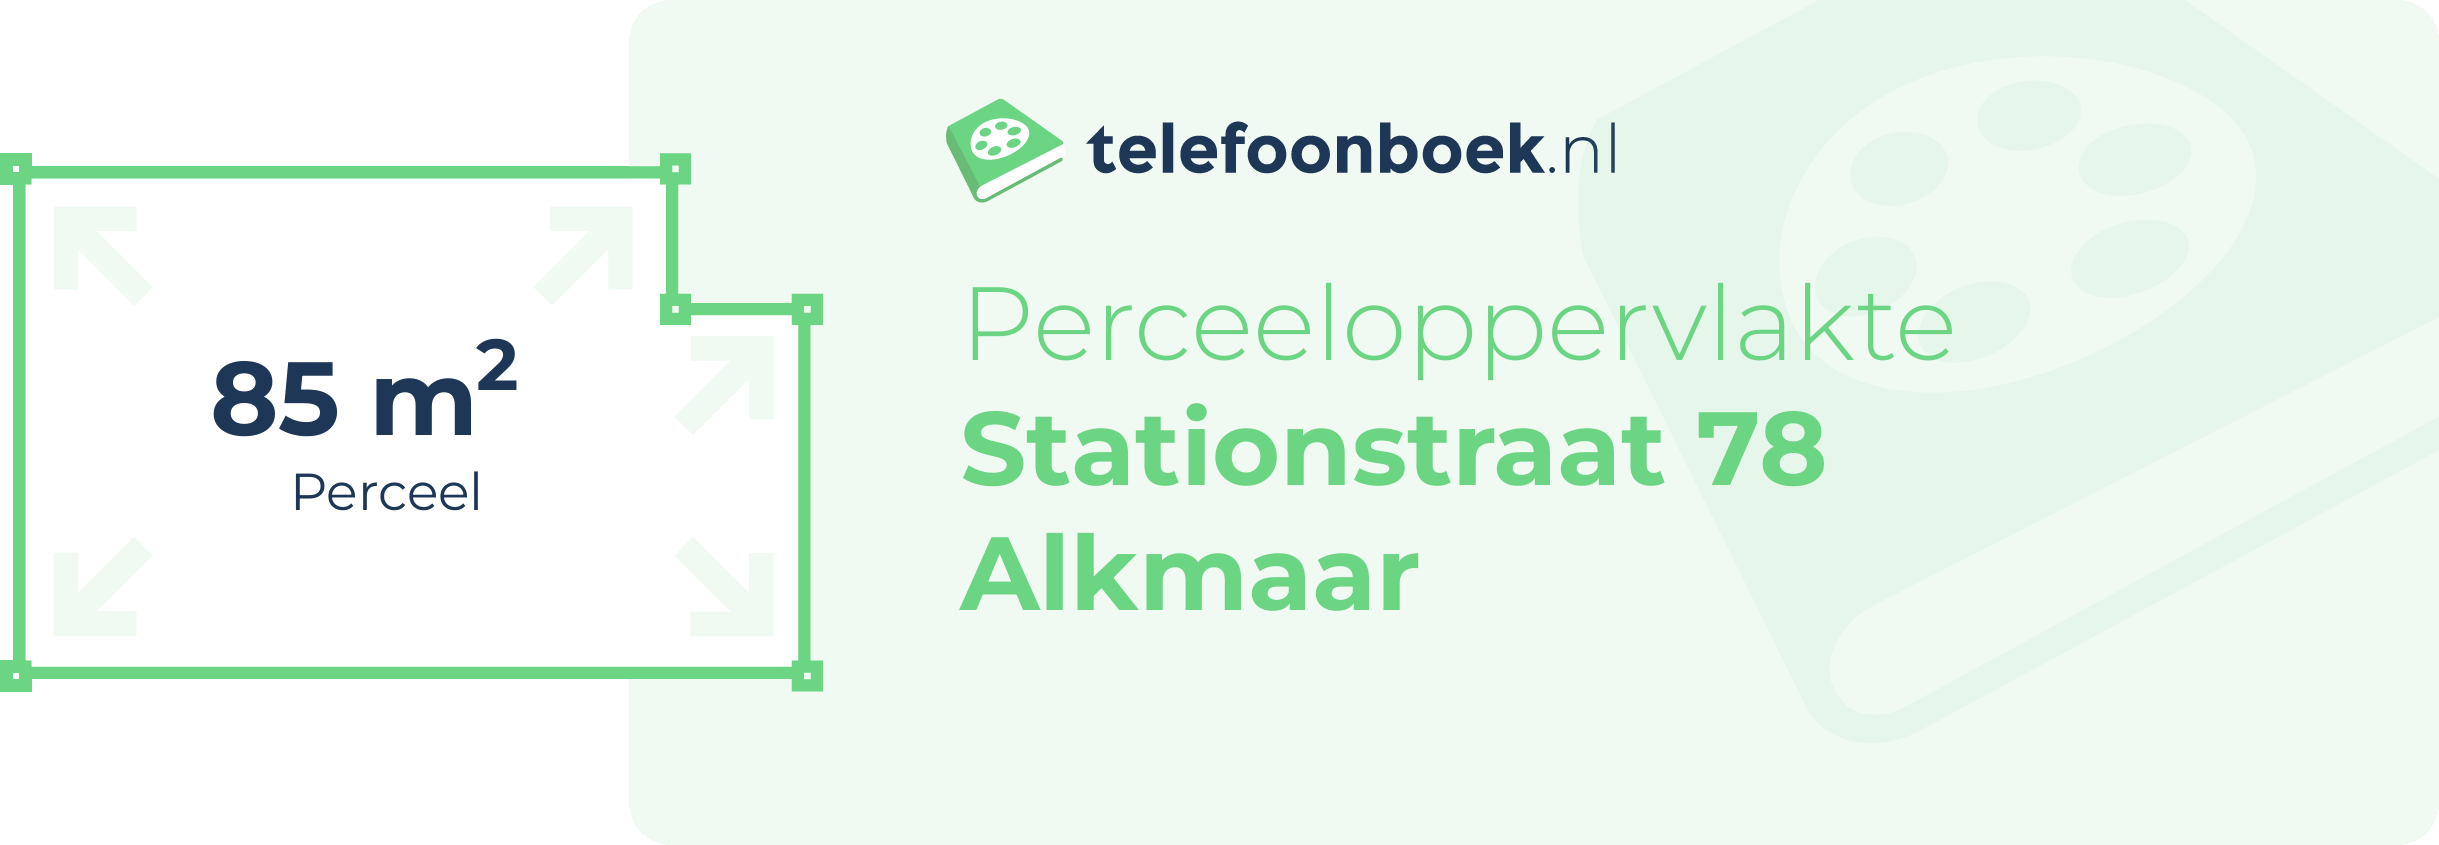 Perceeloppervlakte Stationstraat 78 Alkmaar